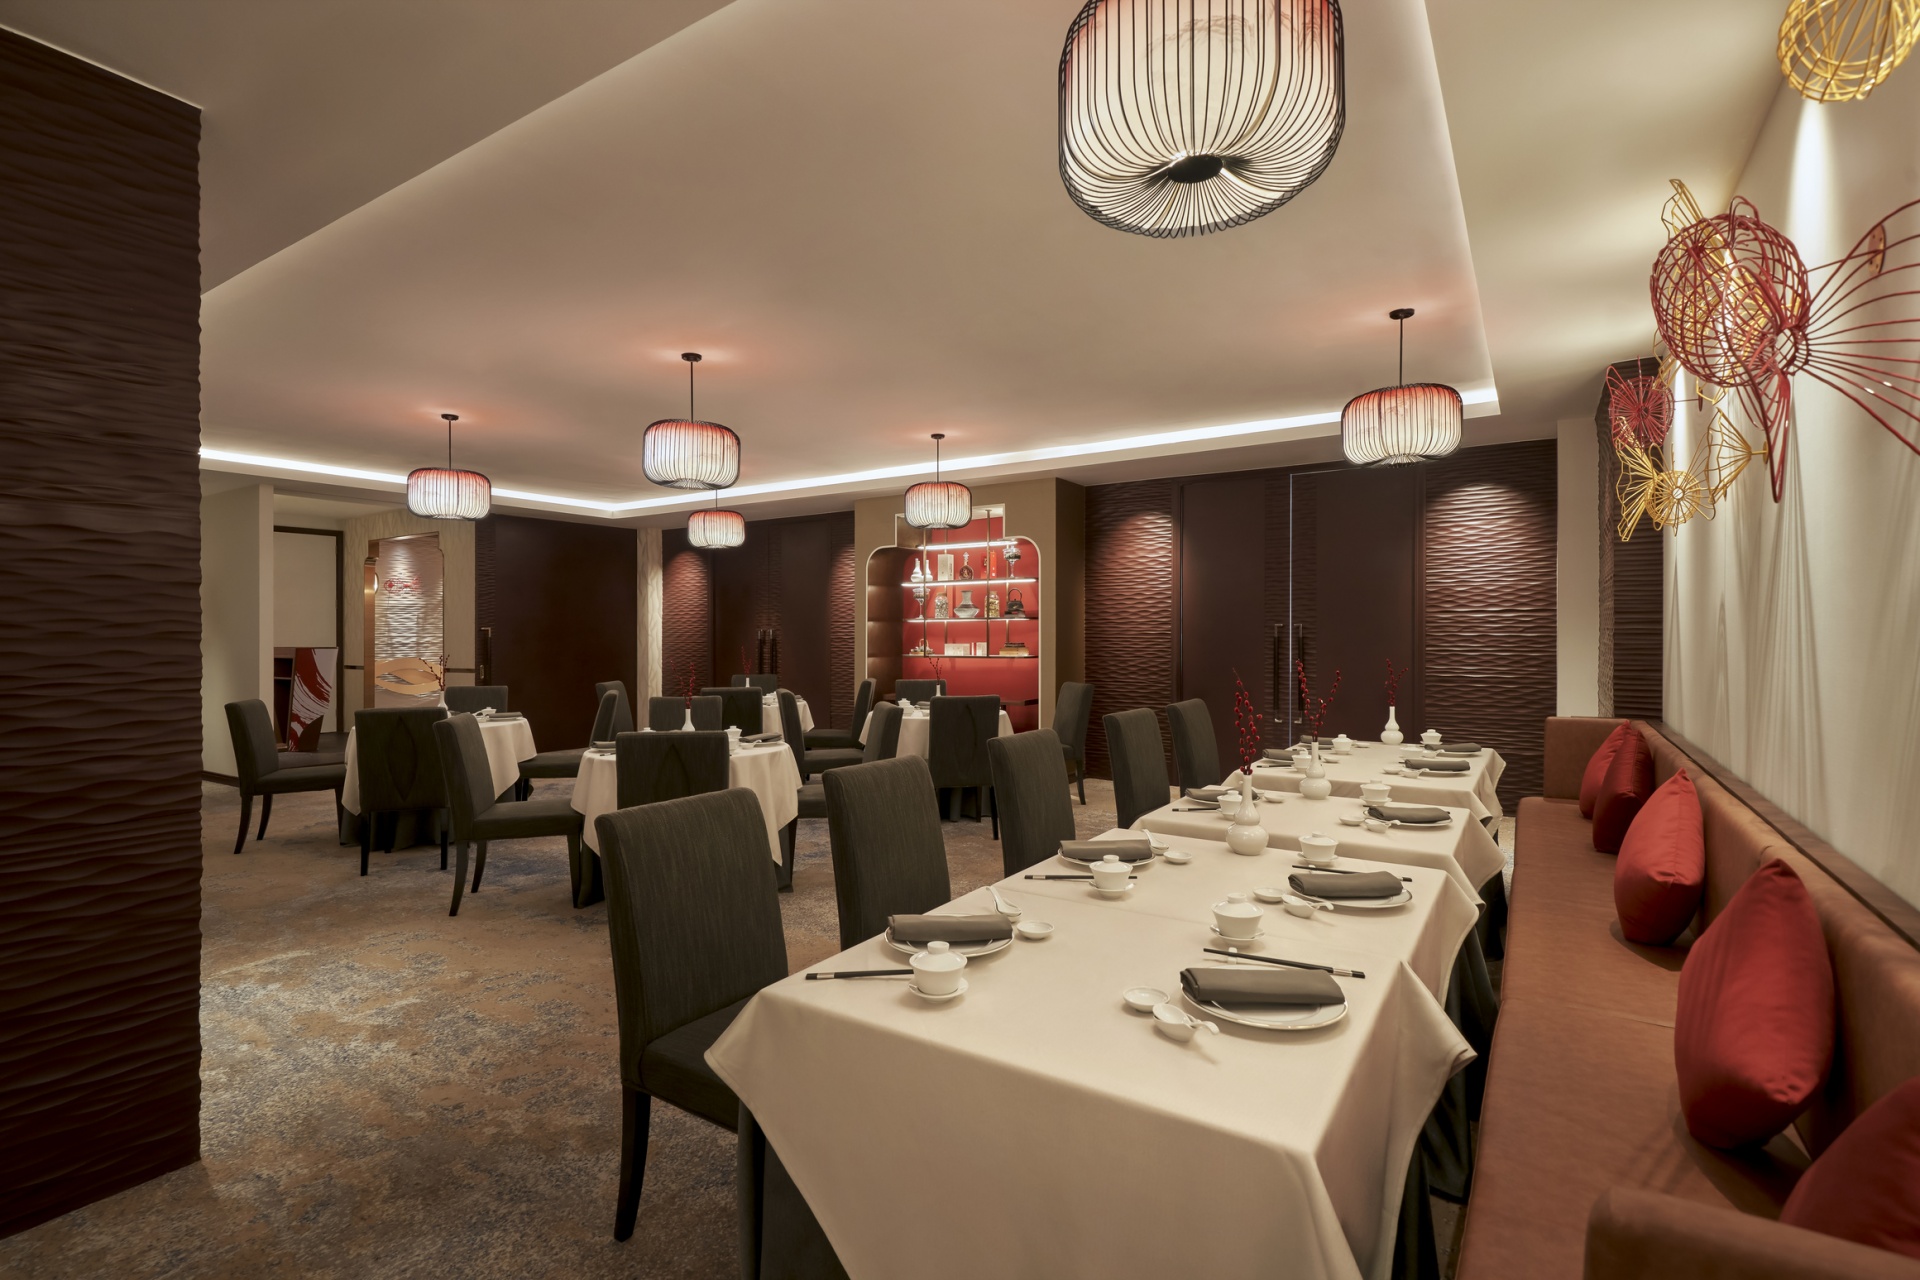 Li Bai restaurant reopens after uplifting renovation